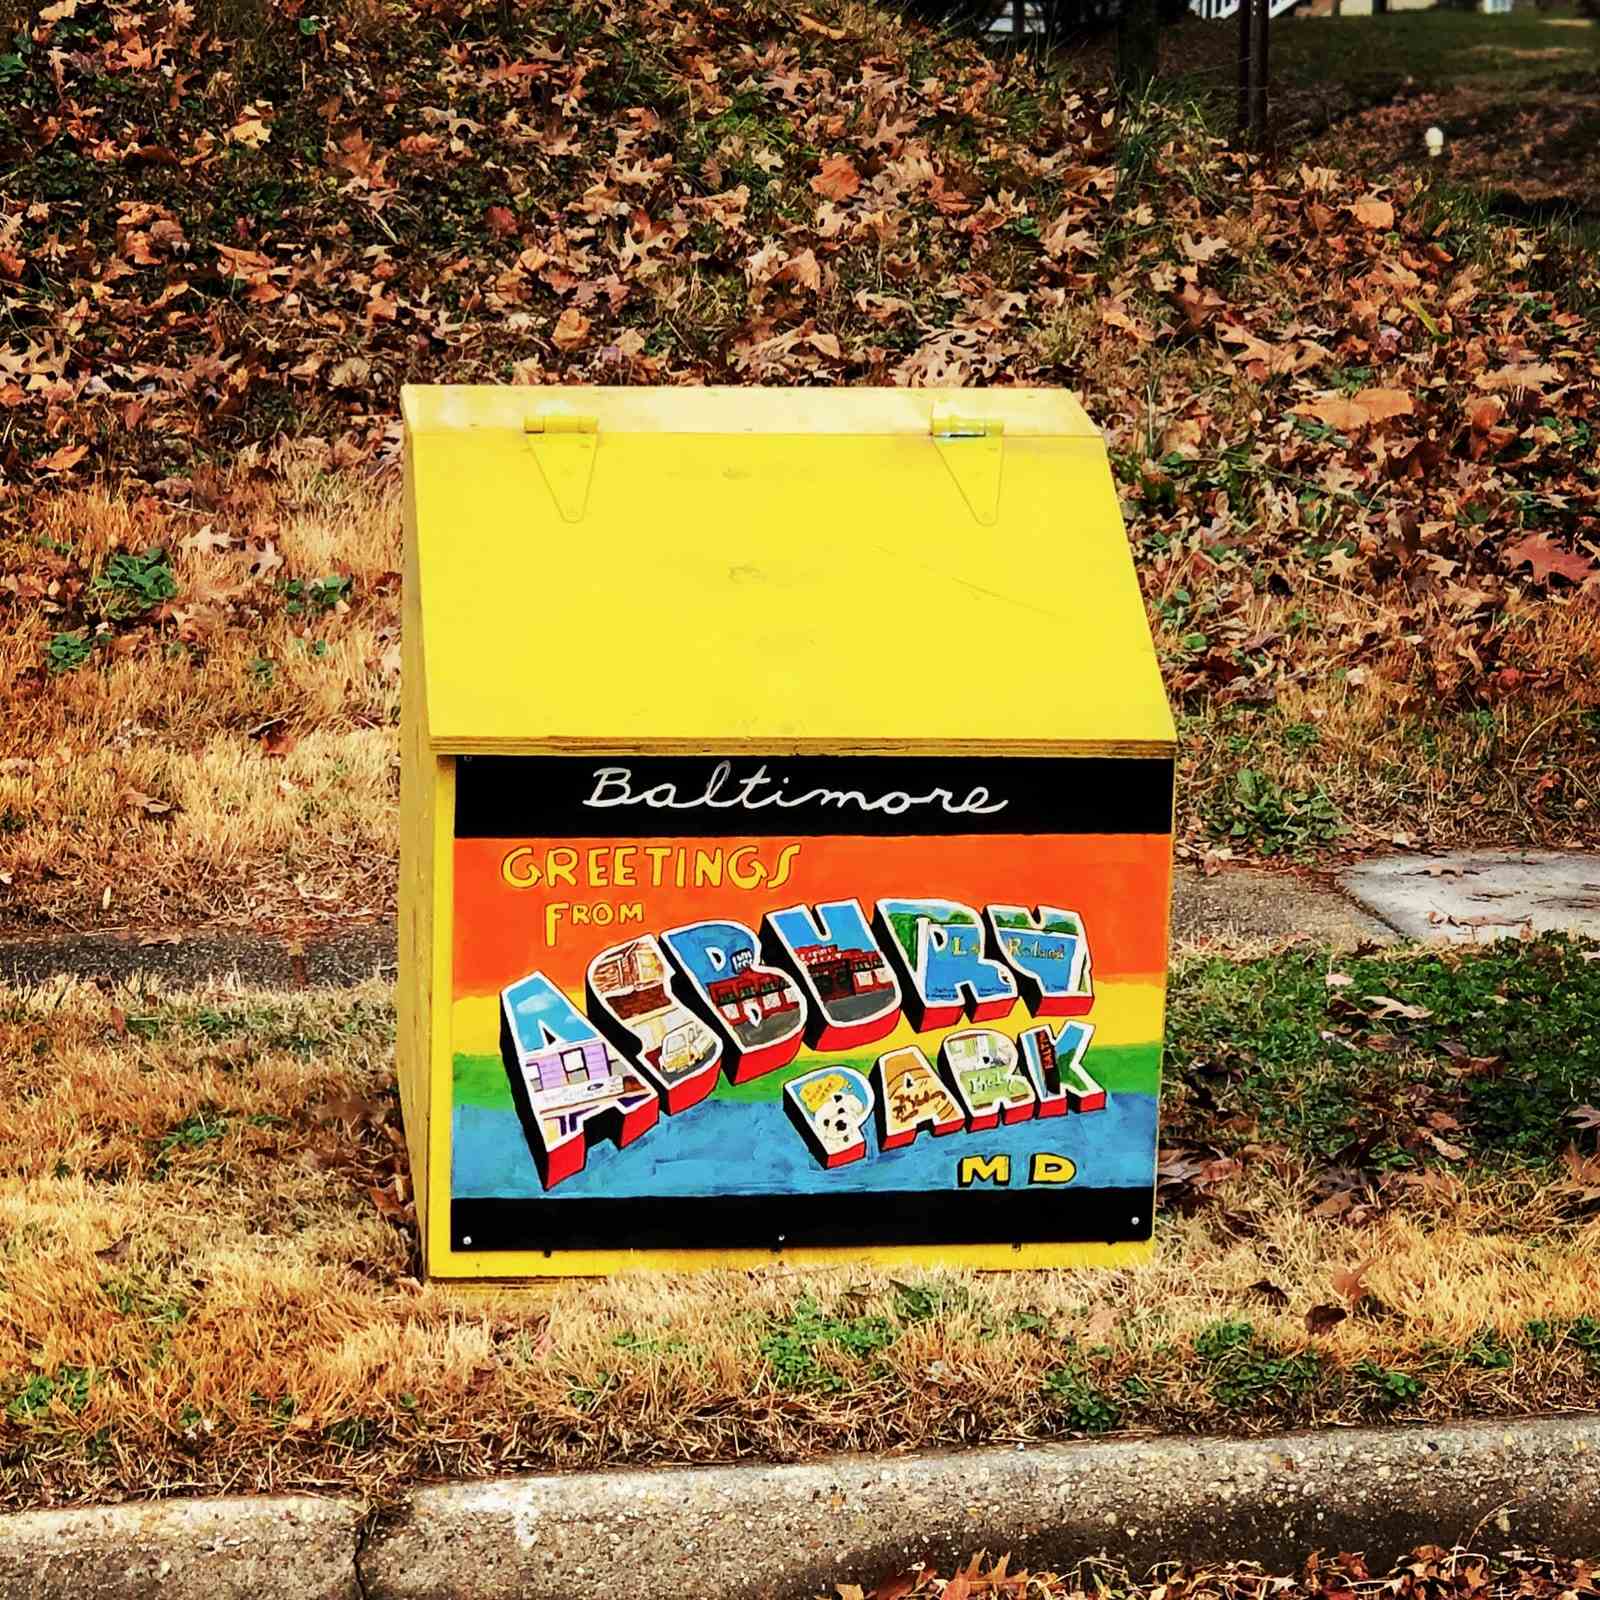 A yellow salt box with an Asbury Parkthemed illustration.